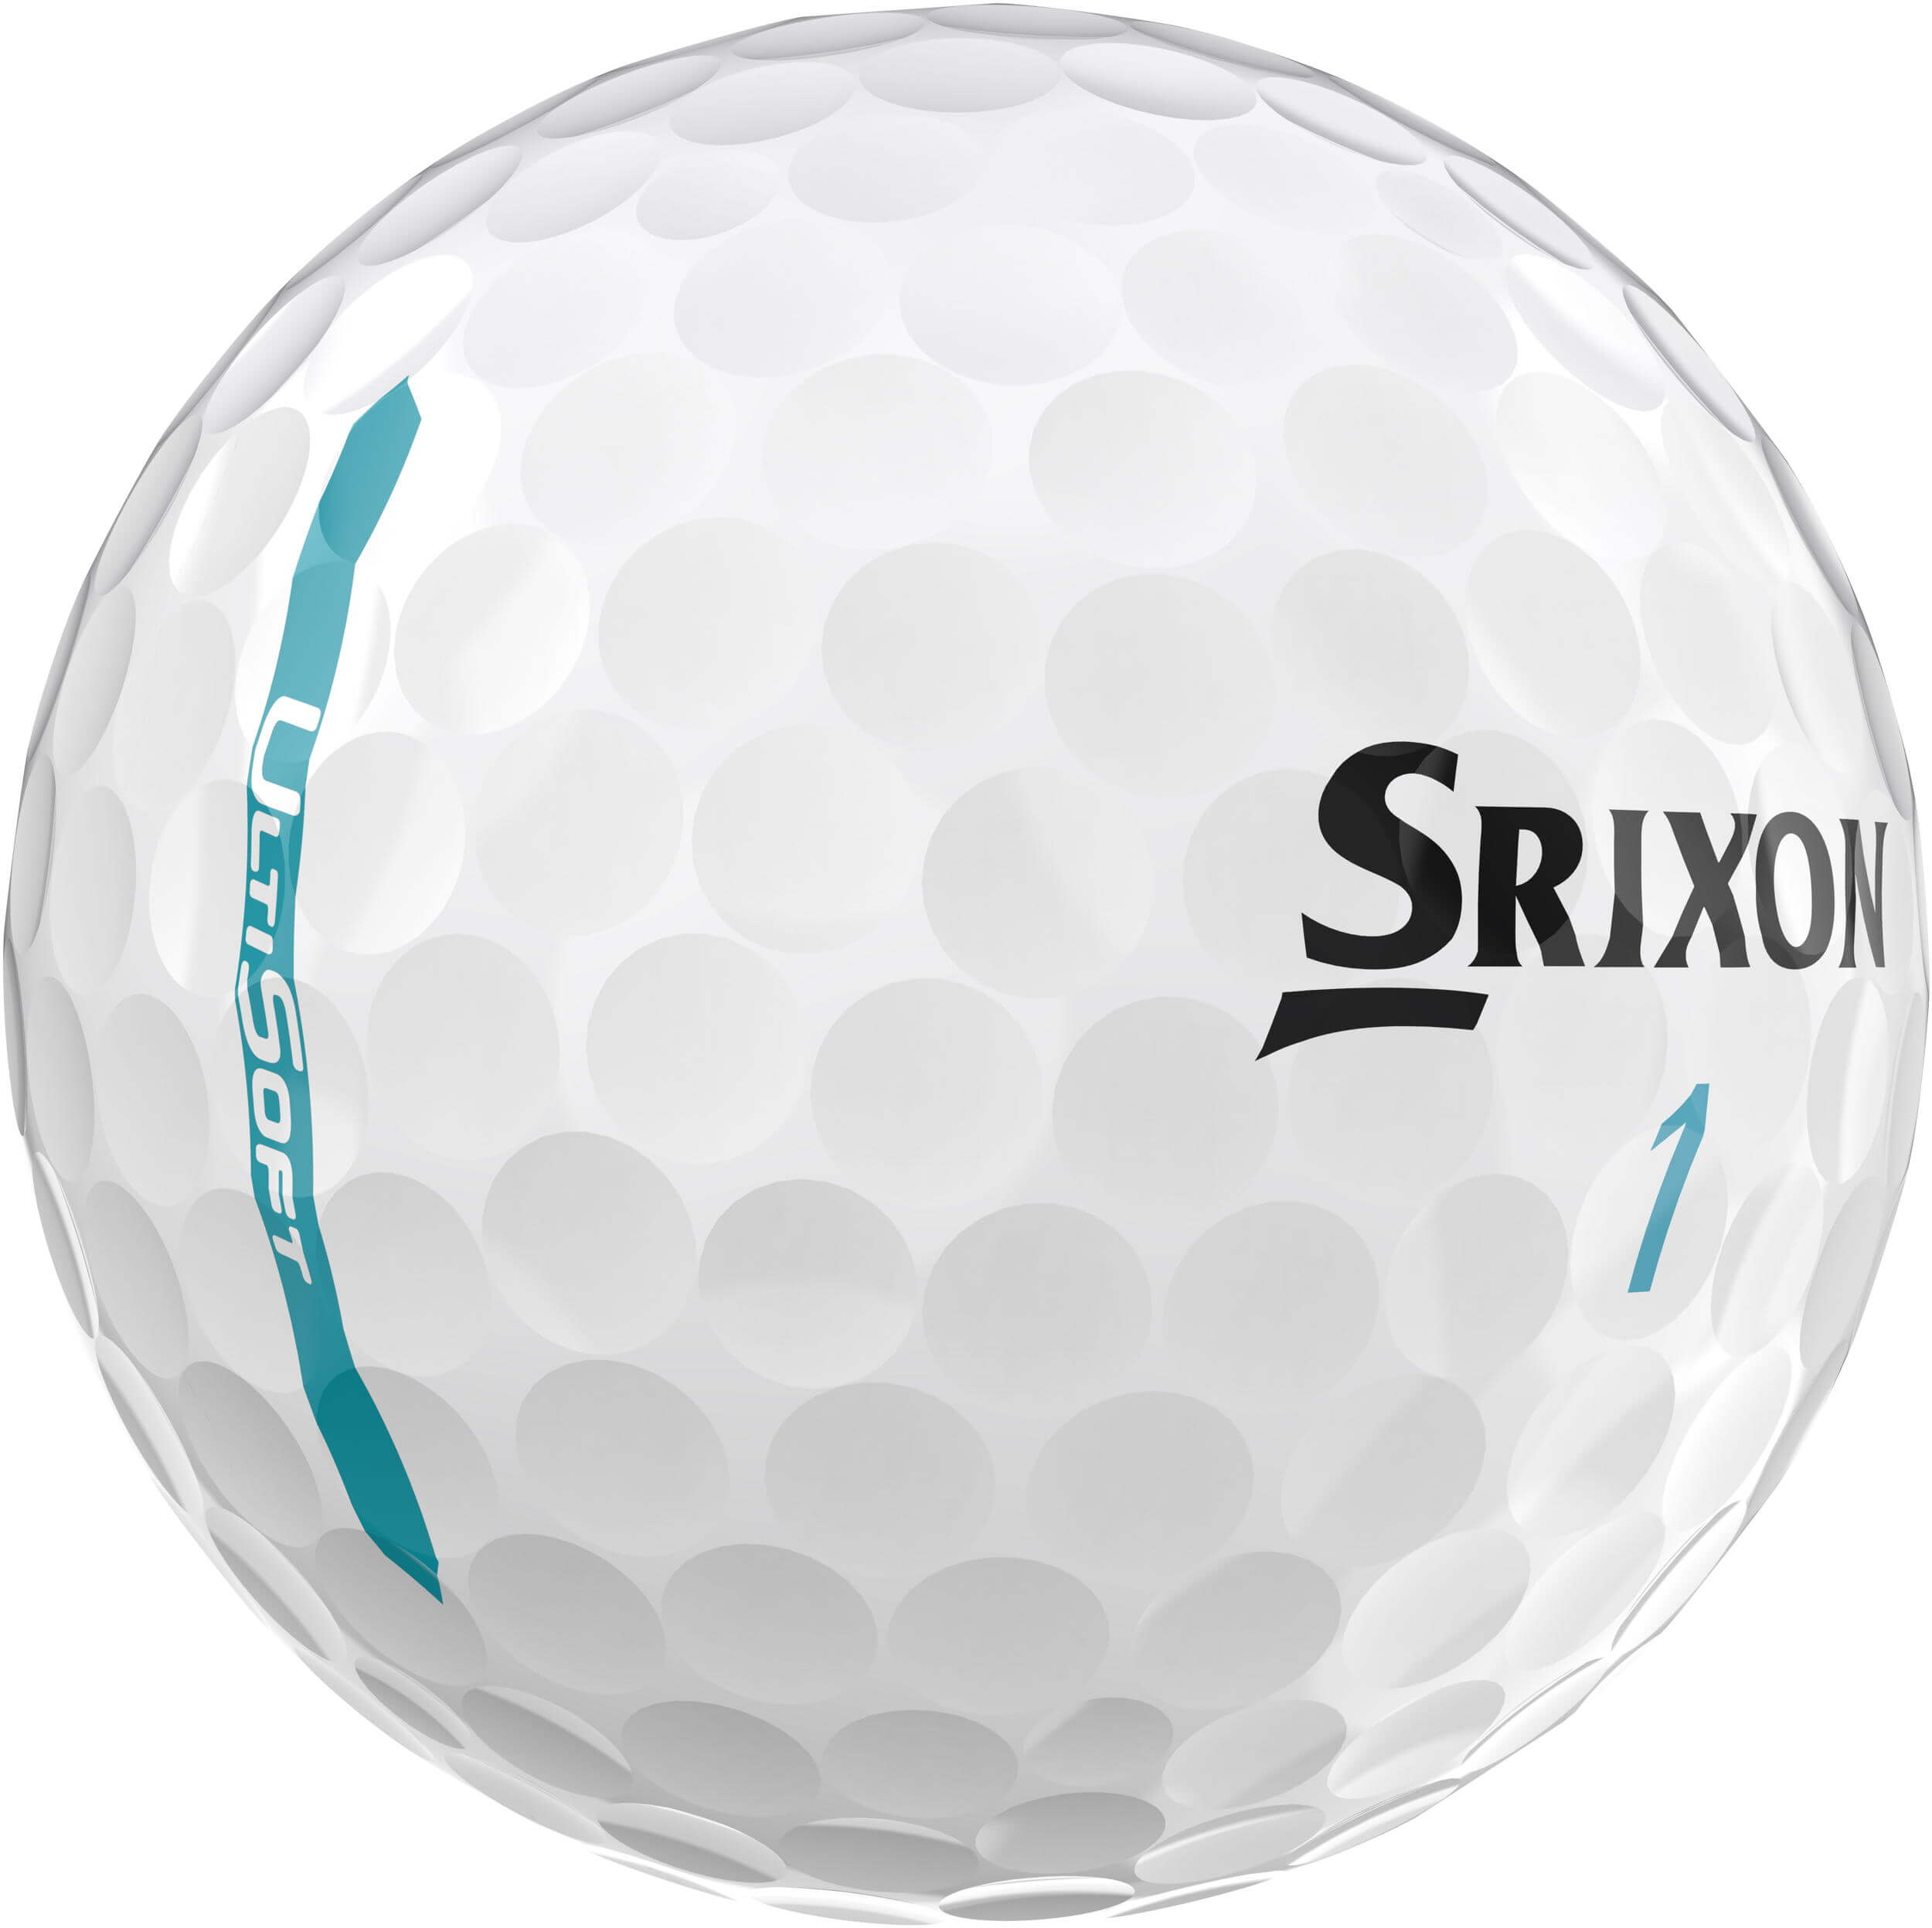 Srixon UltiSoft Golfbälle, white